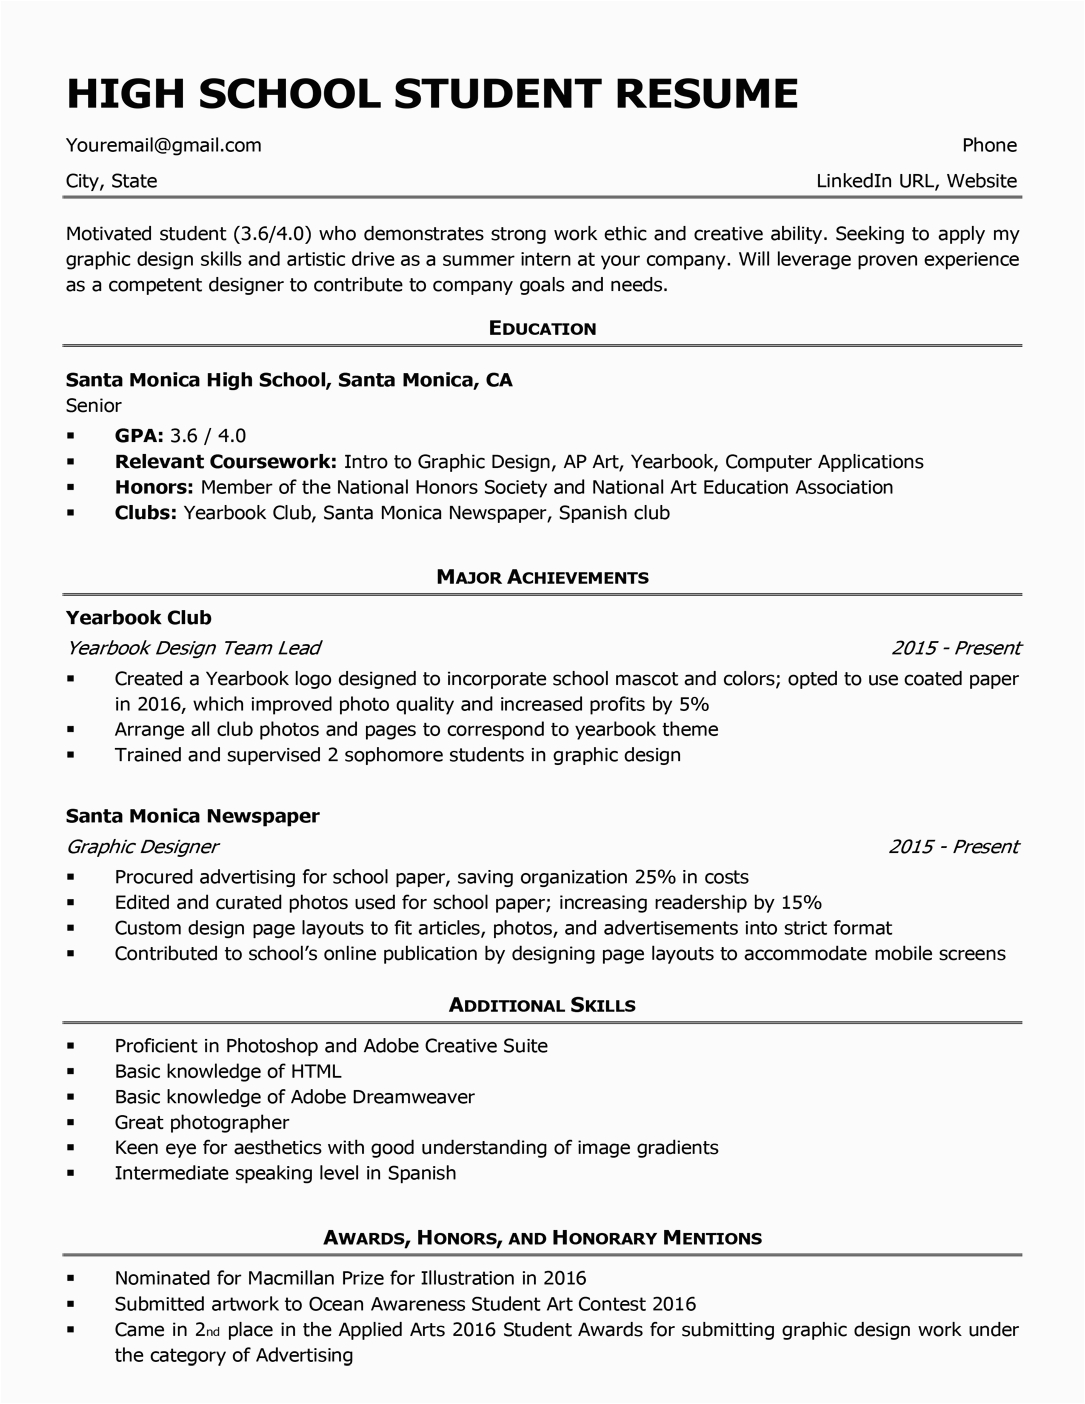 Sample Skills Resume for Highschool Students High School Resume Template & Writing Tips